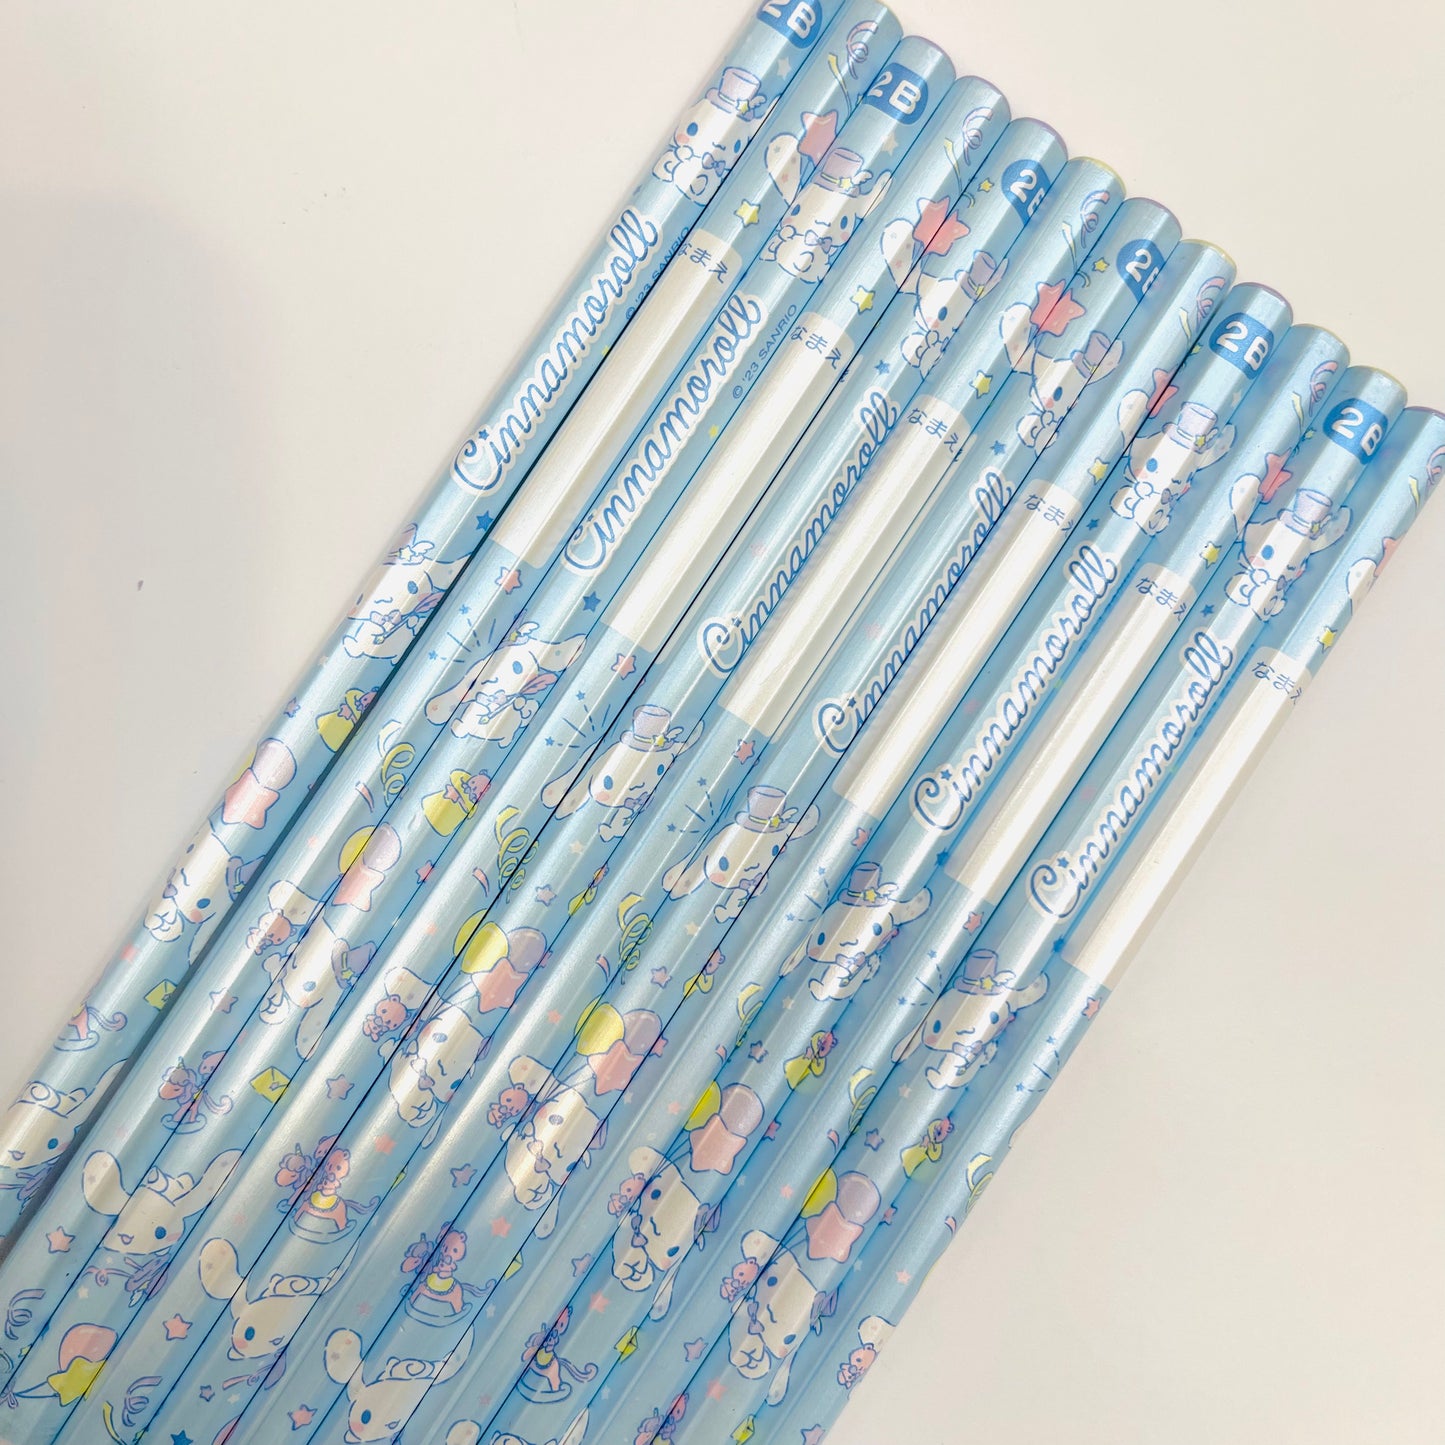 Sanrio 12pcs 2B Pencil Set